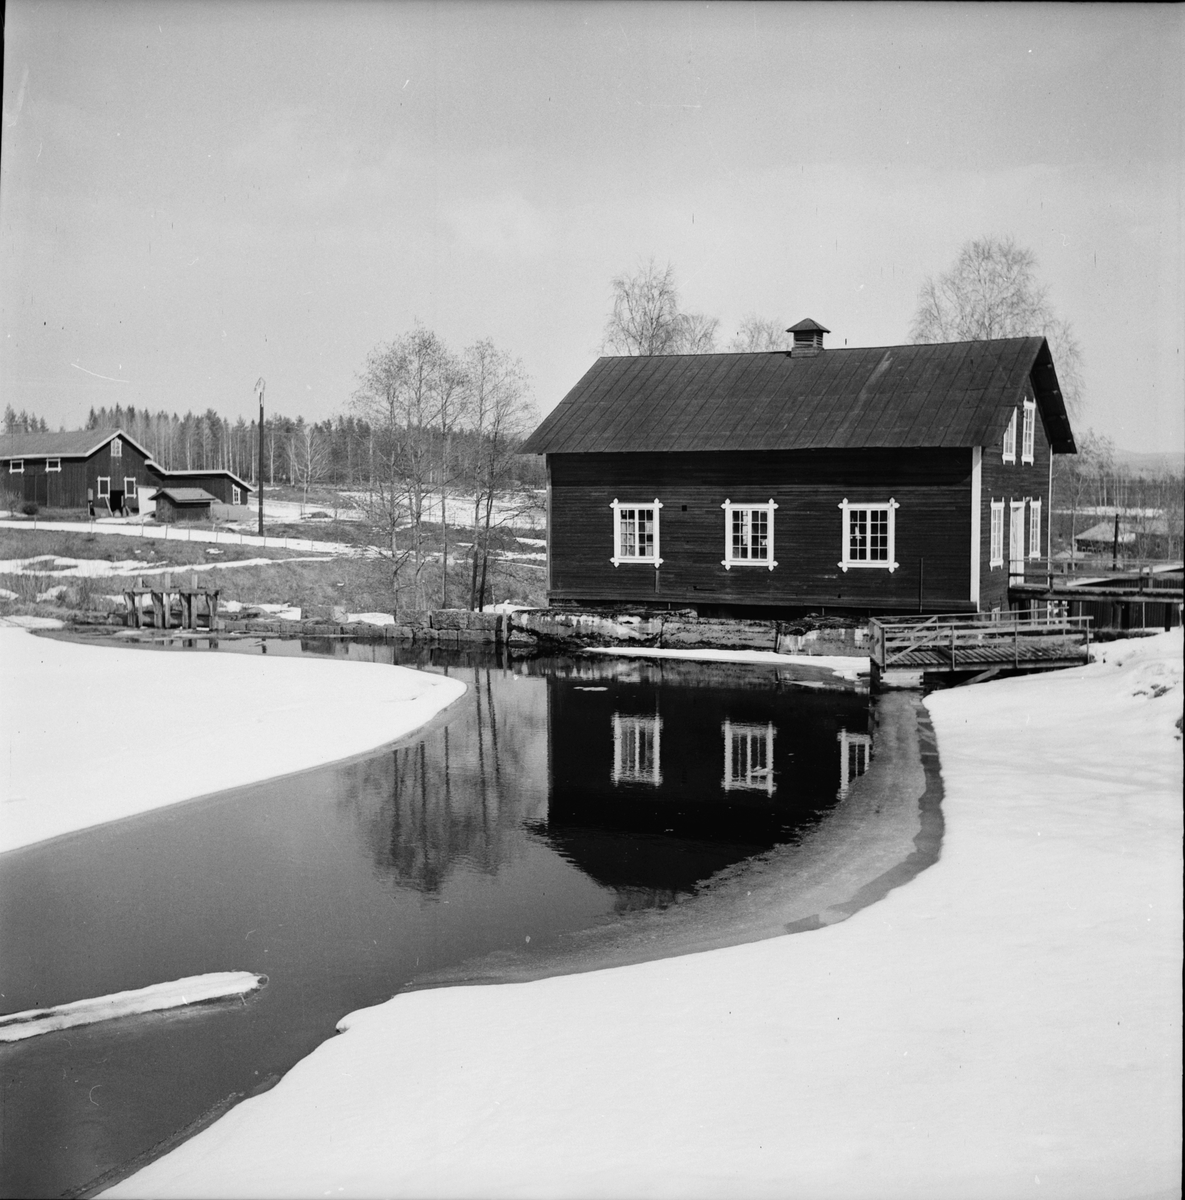 Simeå,
Bilder fr samhället,
April 1972